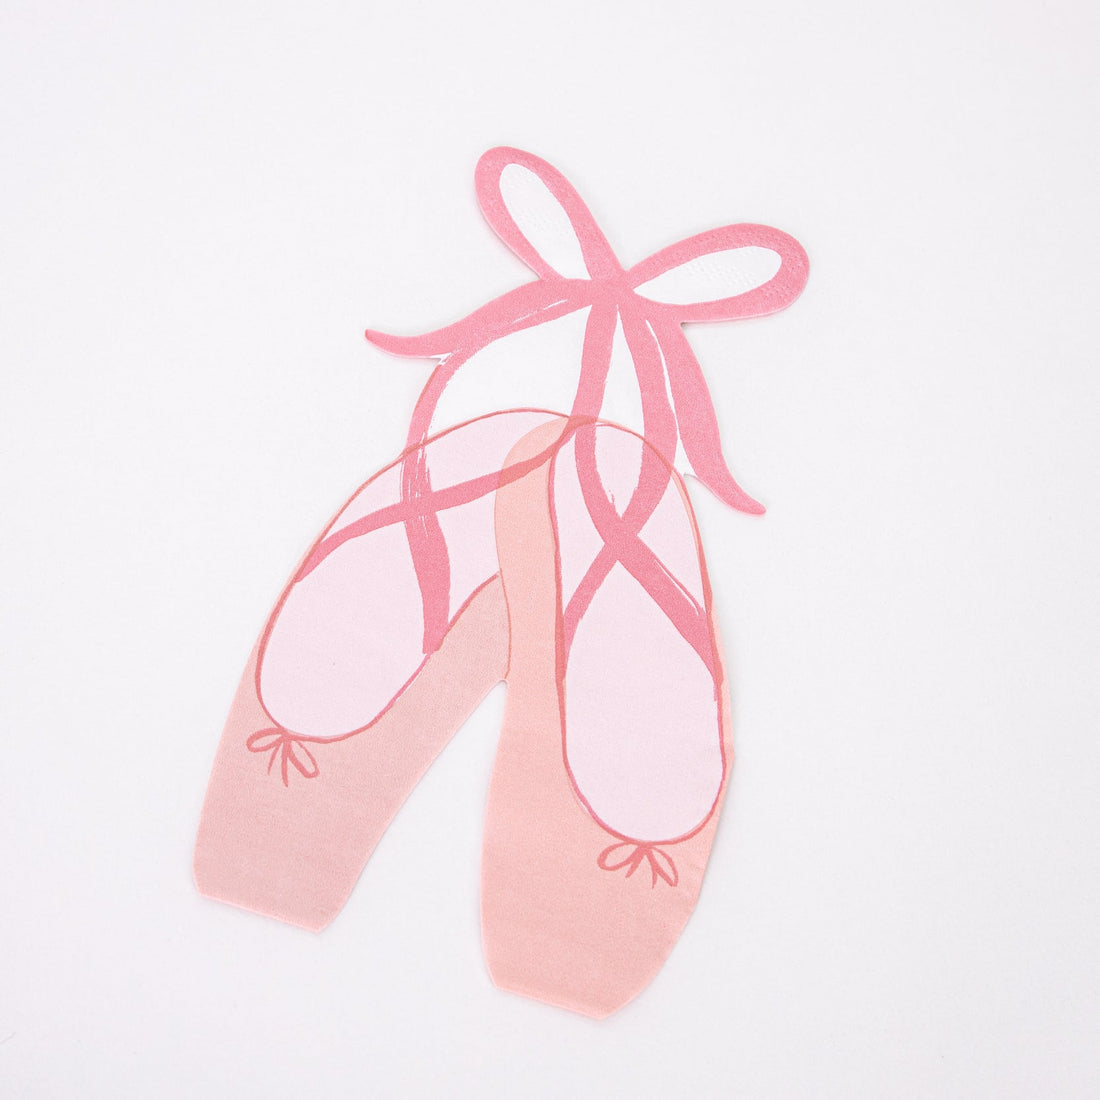 A pair of pink Meri Meri Ballet Slippers Napkins on a white party table.